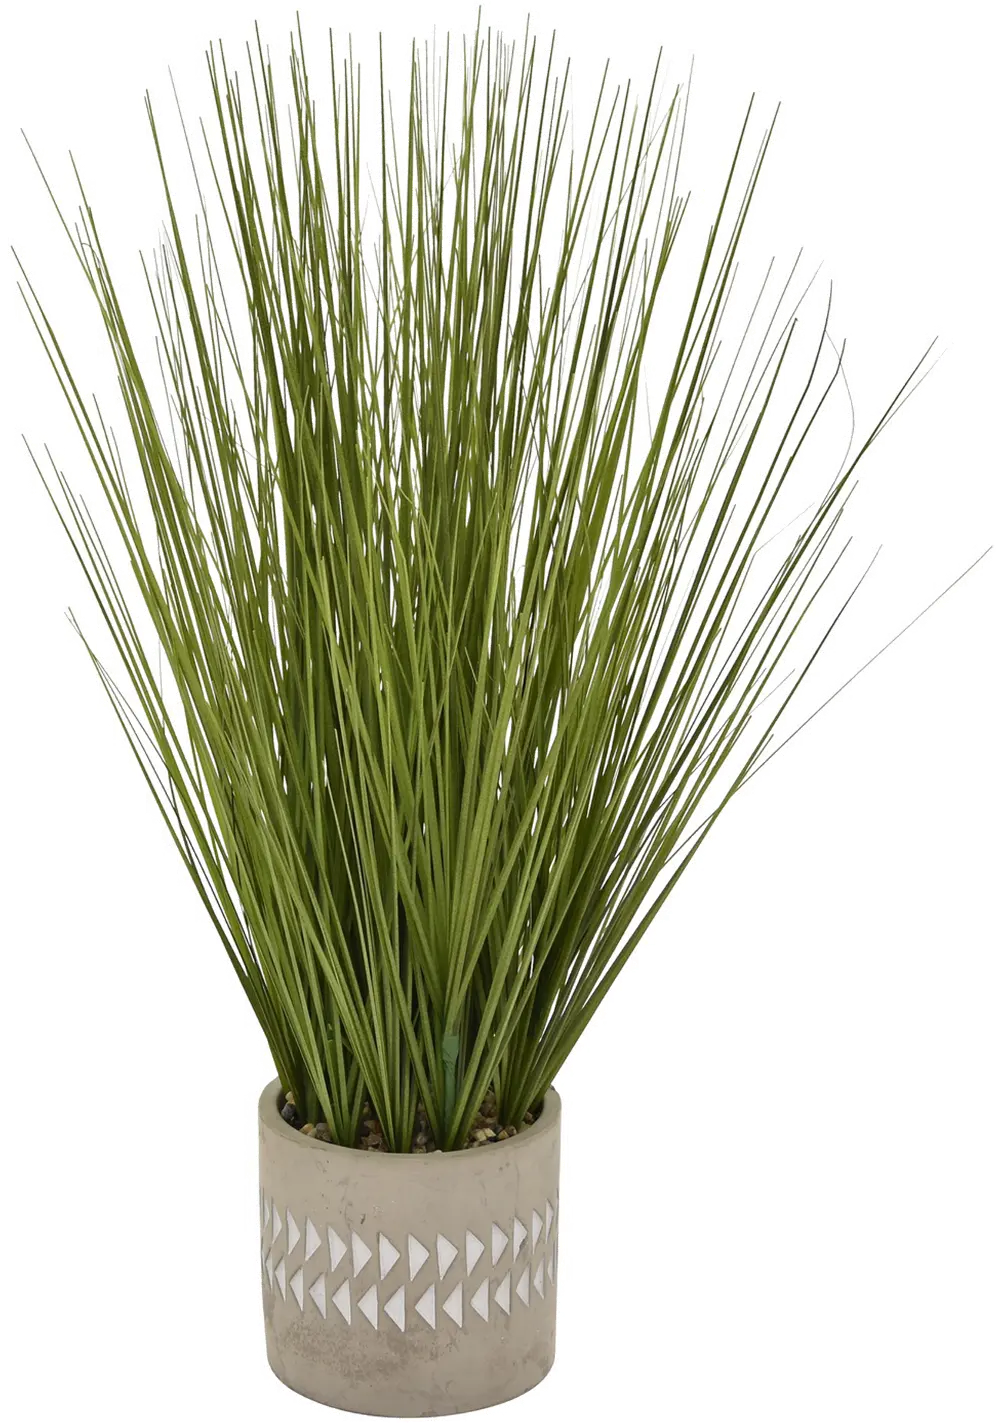 21 Inch Faux Grass Planter Arrangement in a Patterned Pot-1